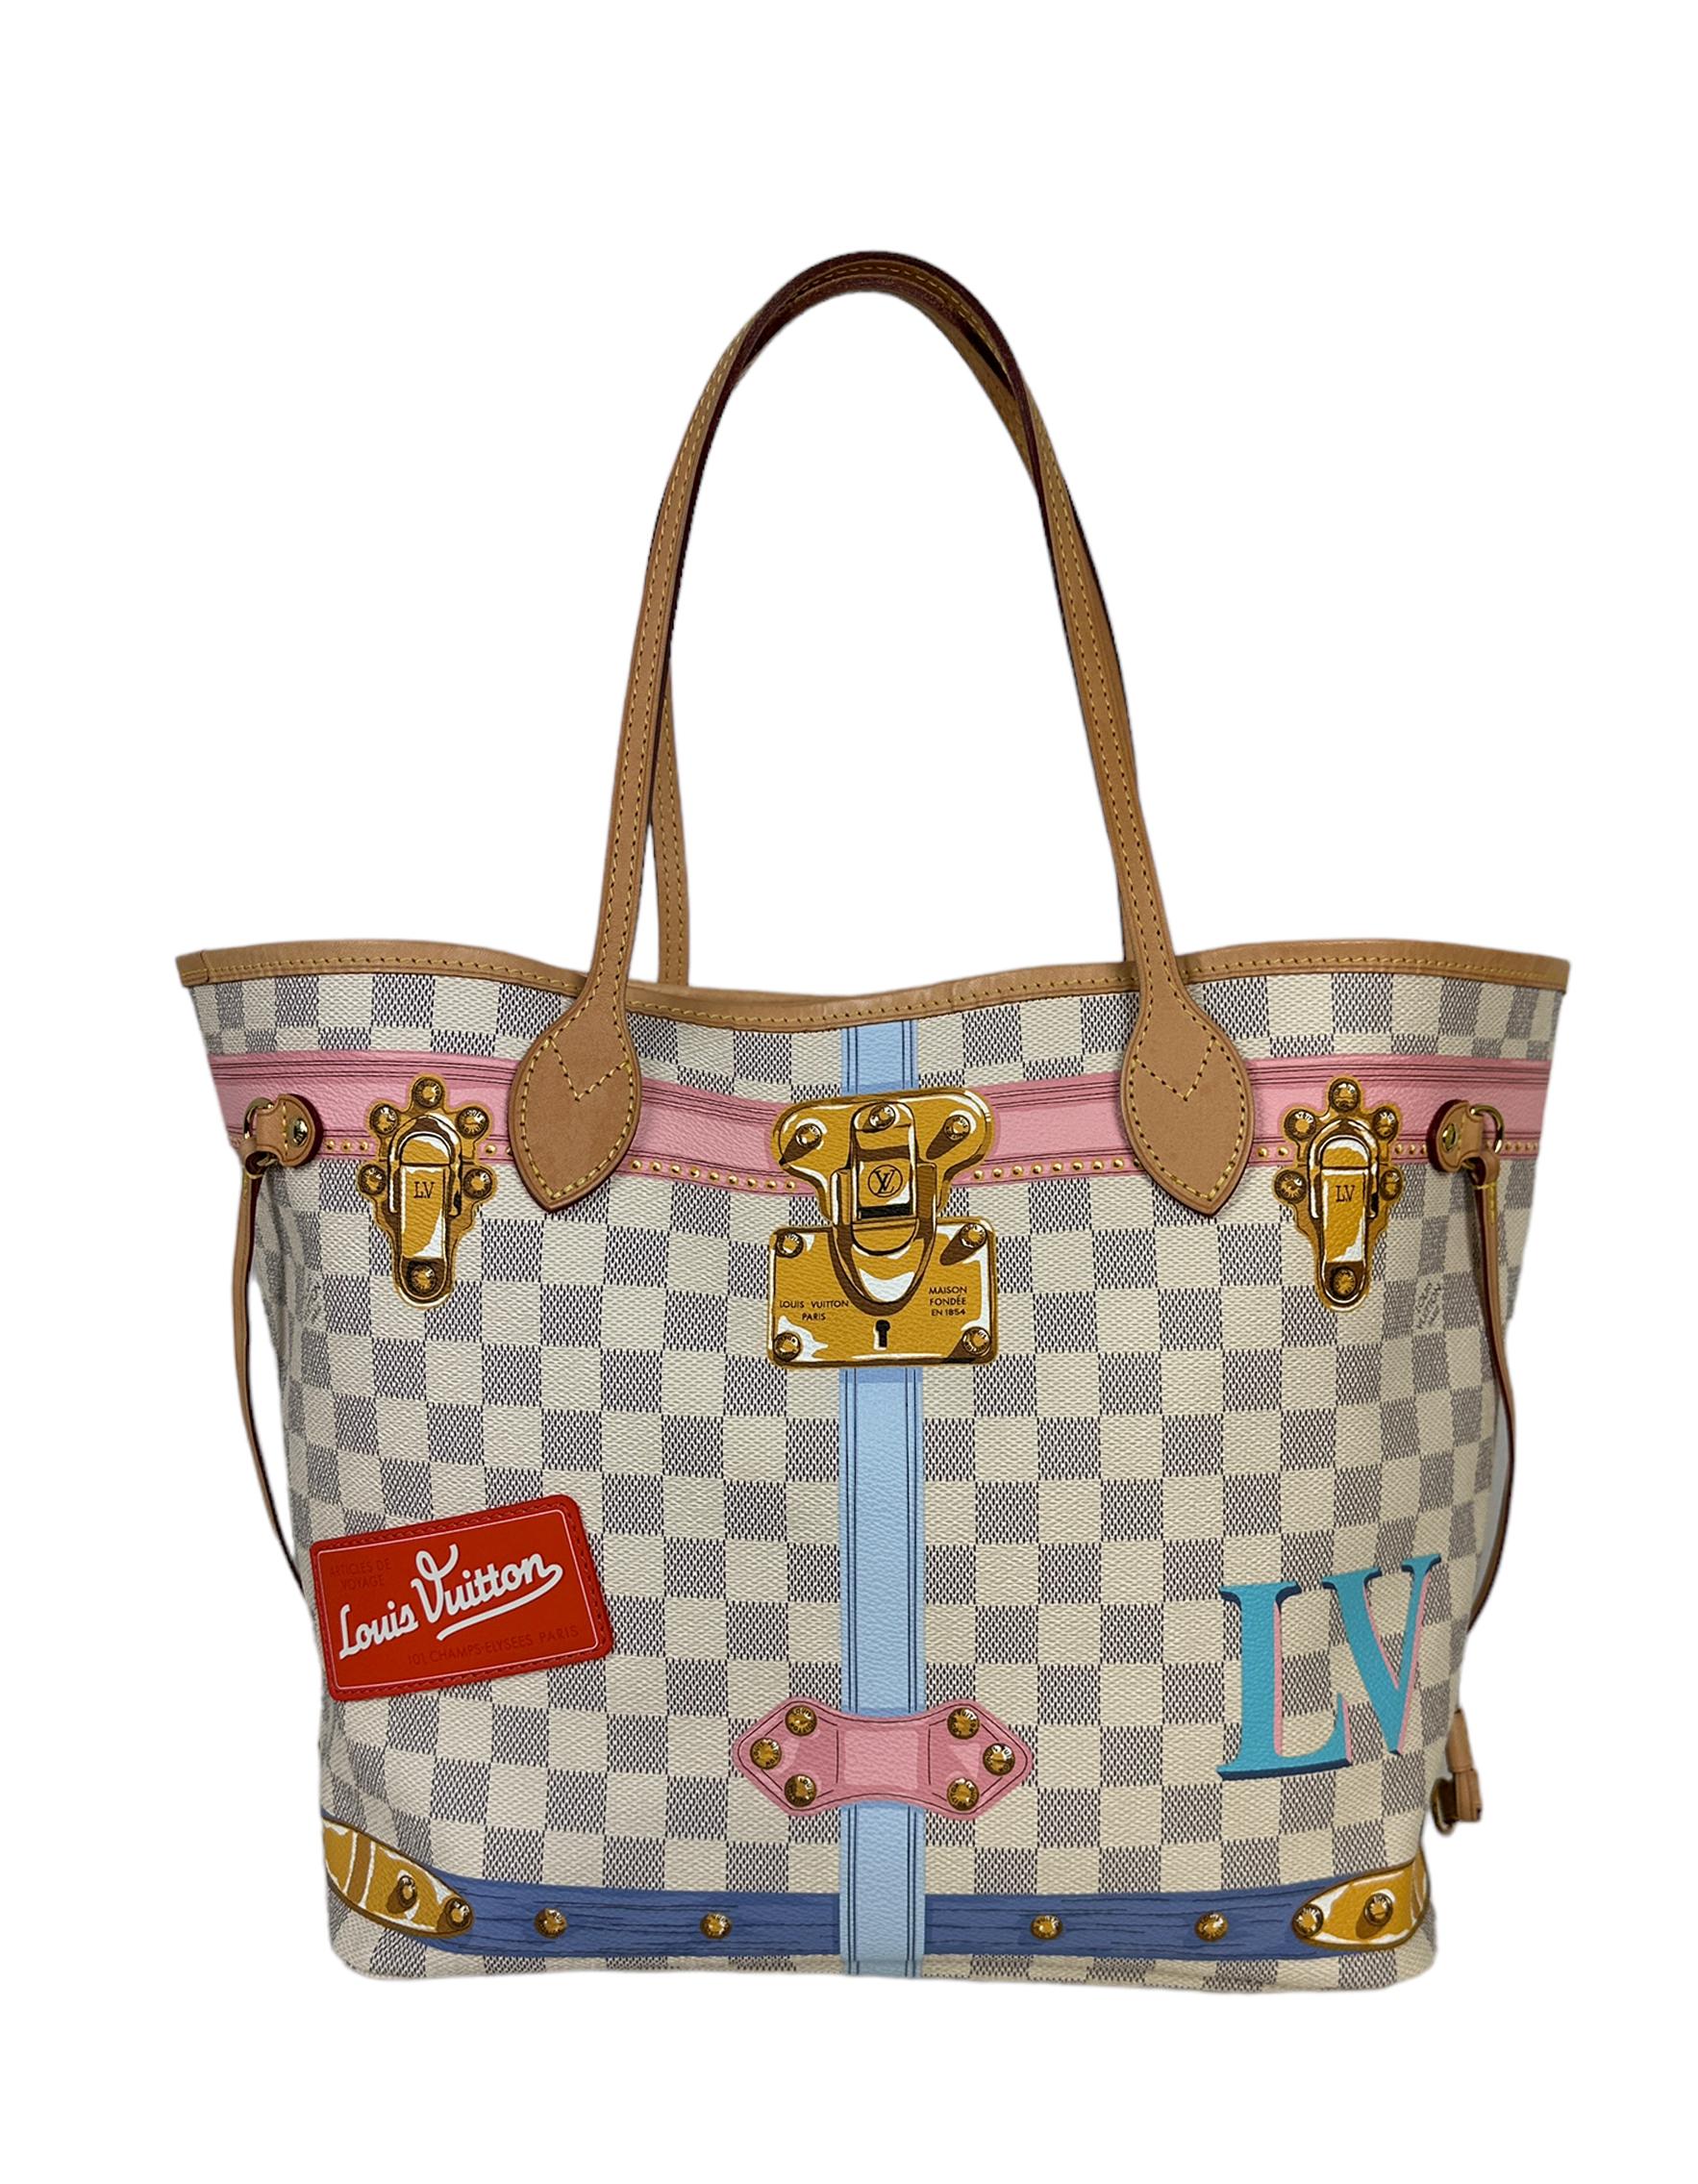 Women's Louis Vuitton Damier Azur Summer Trunks Neverfull MM Tote Bag For Sale